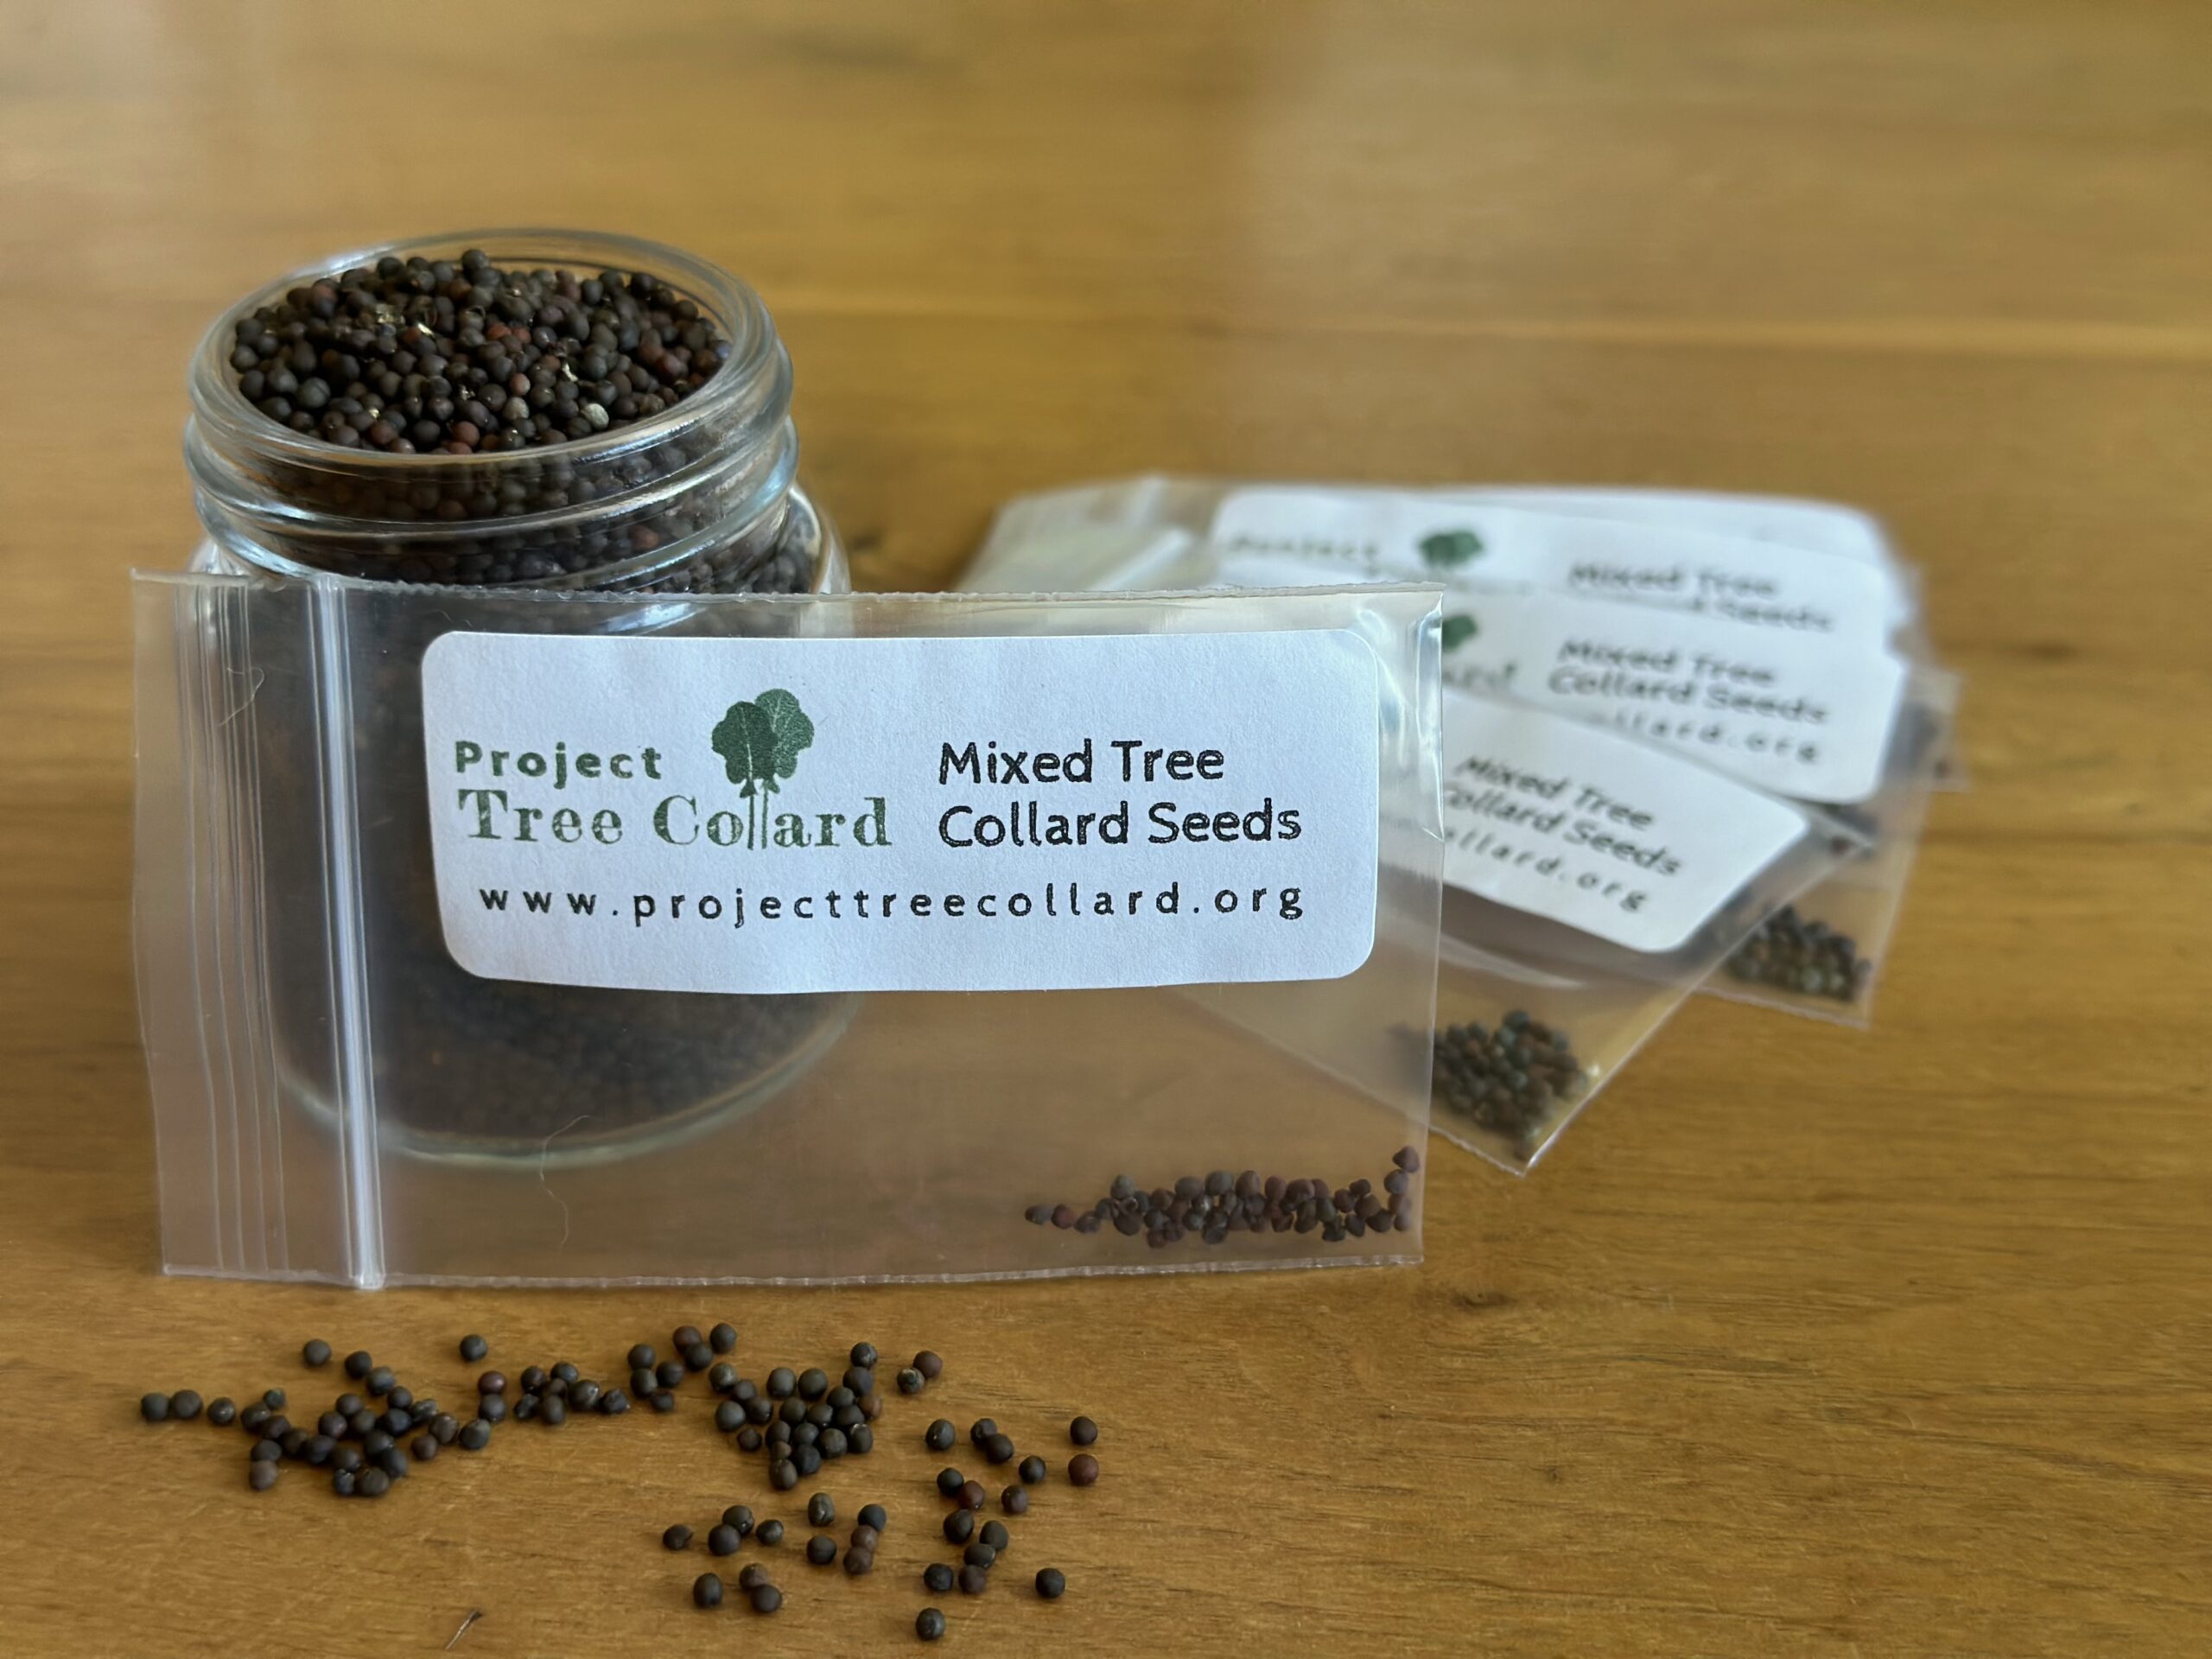 Mixed Tree Collard Seeds